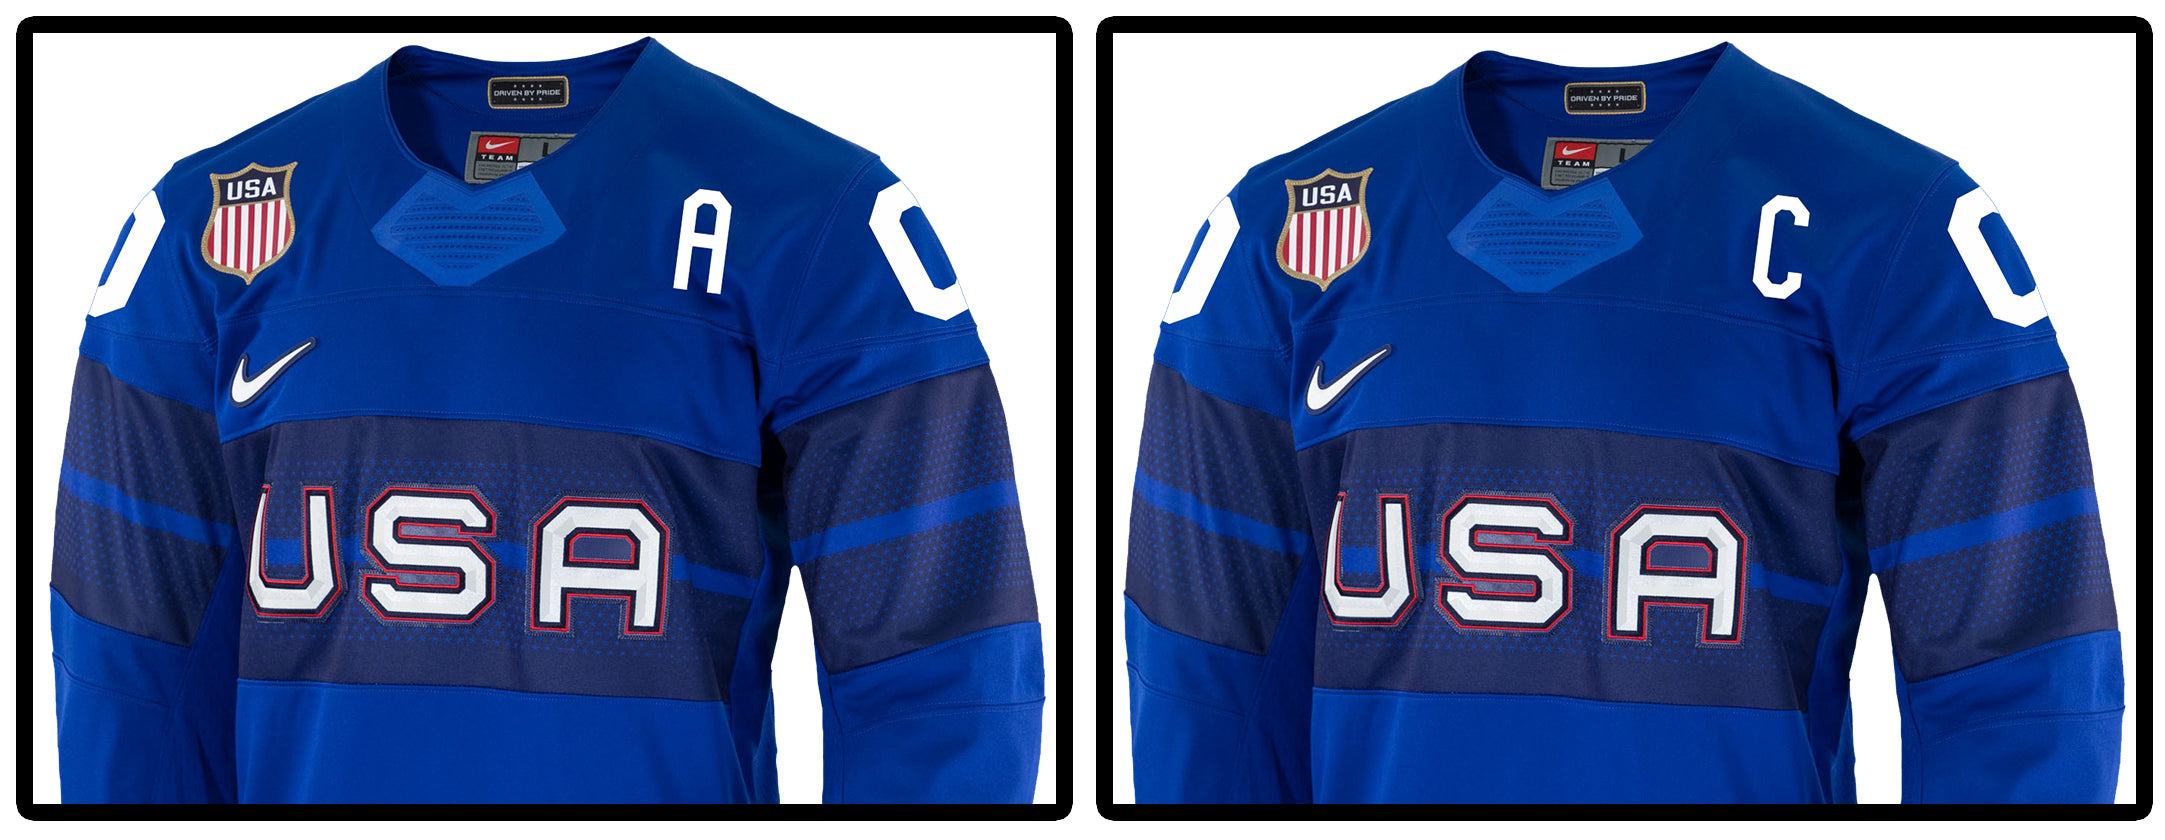 USA Olympic hockey jerseys ruined by Nike's gimmicks 